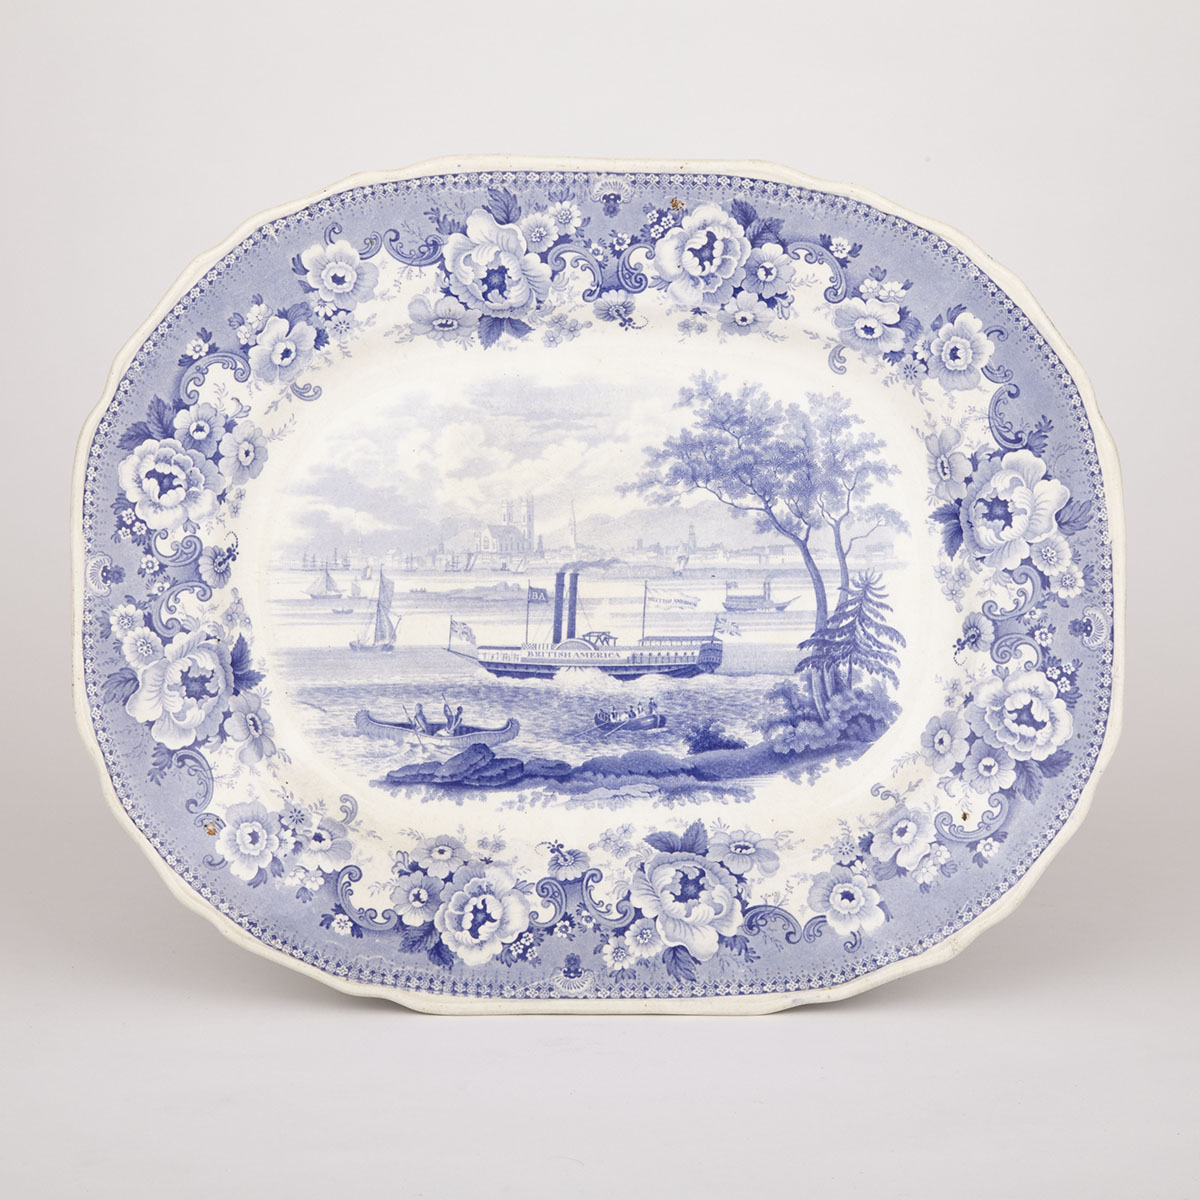 Davenport Blue-Printed ‘Montreal’ Oval Platter, c.1835